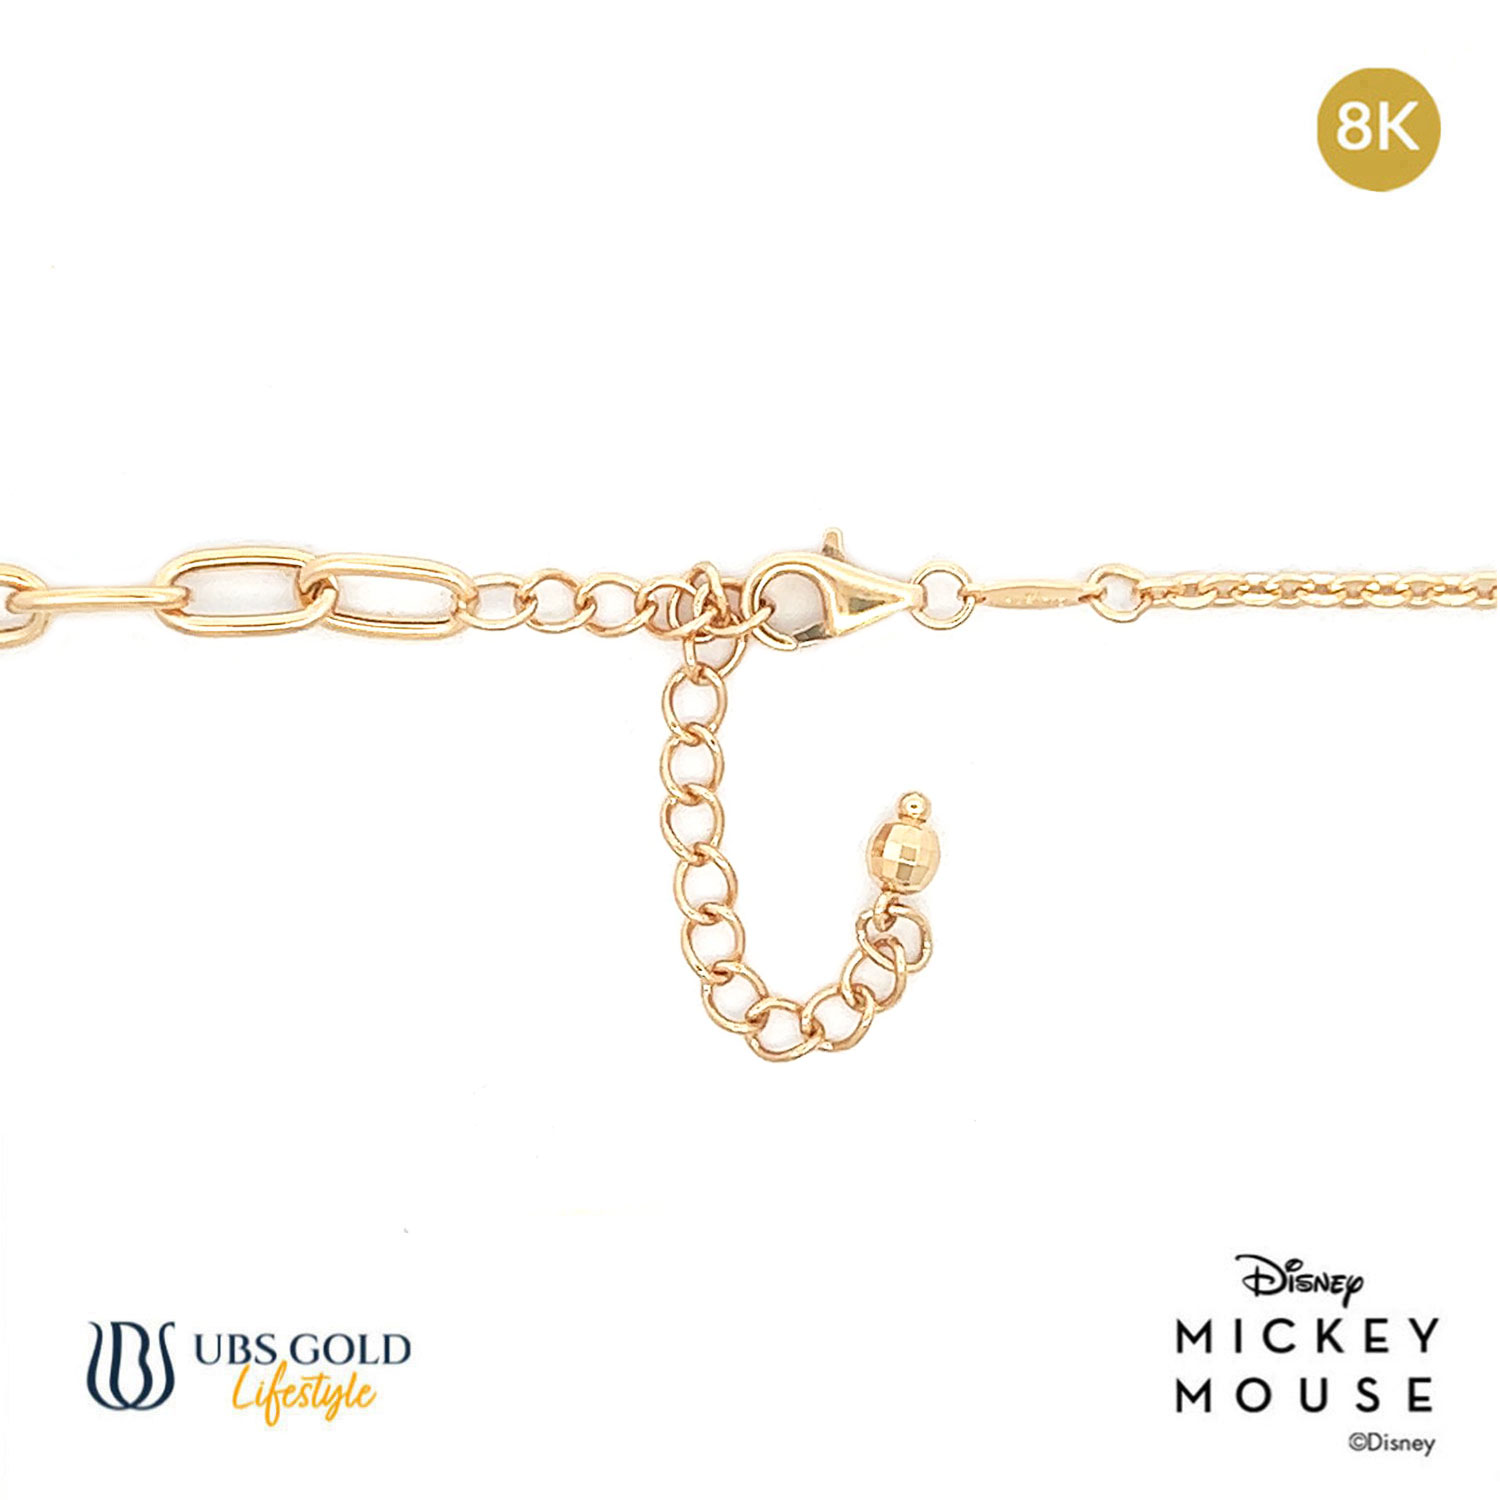 UBS Gold Kalung Emas Disney Mickey Mouse - Hky0210K - 8K